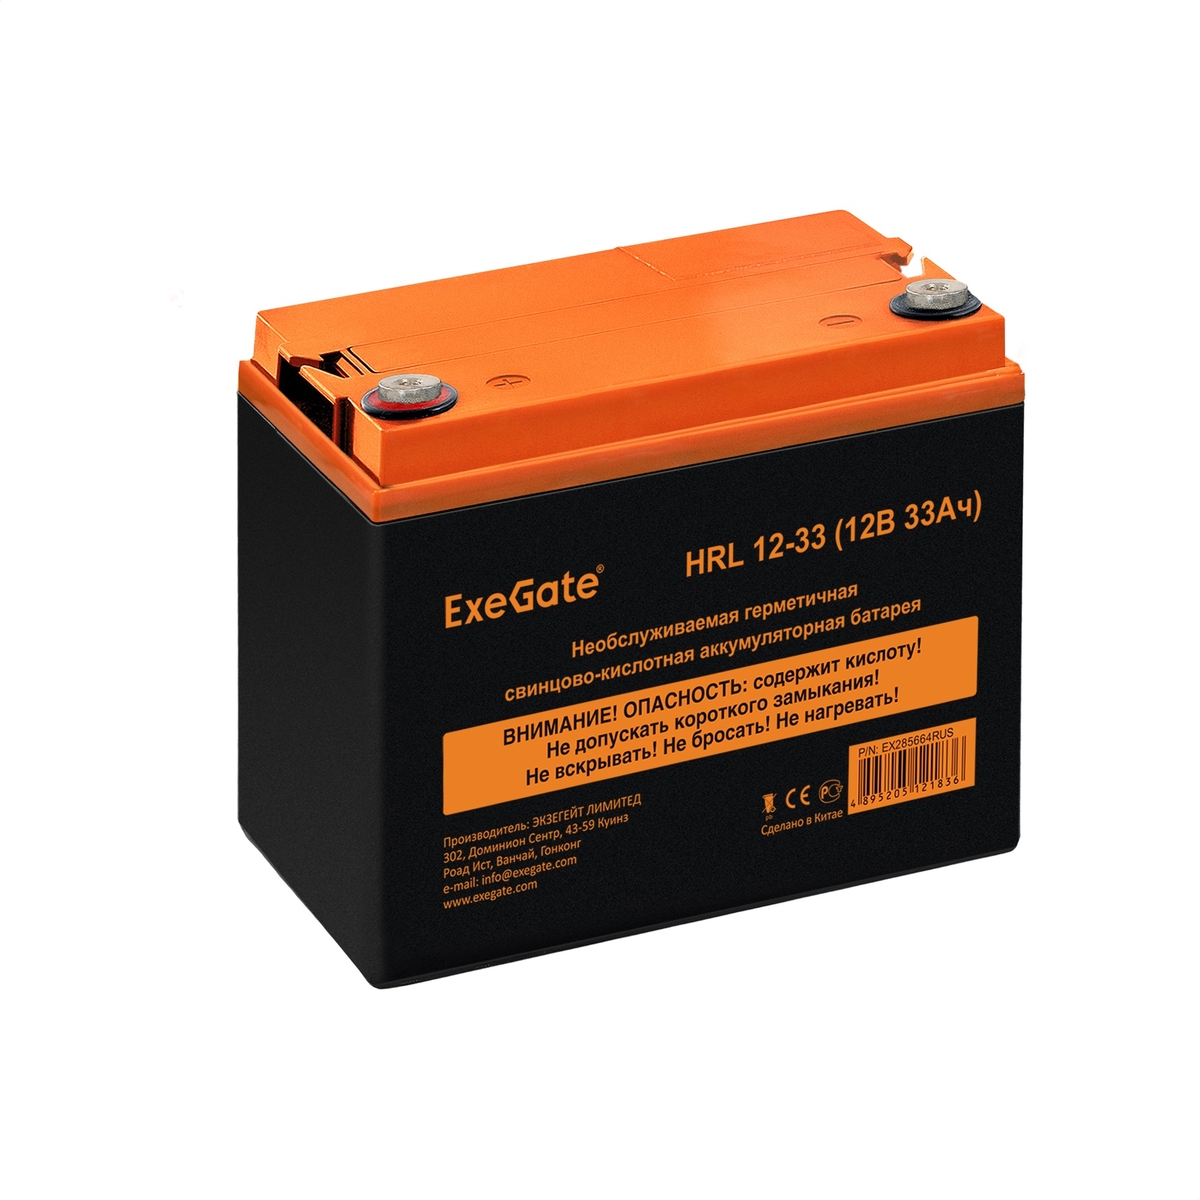 UPS set EX295996 + battery 33Ah EX285664 1 piece